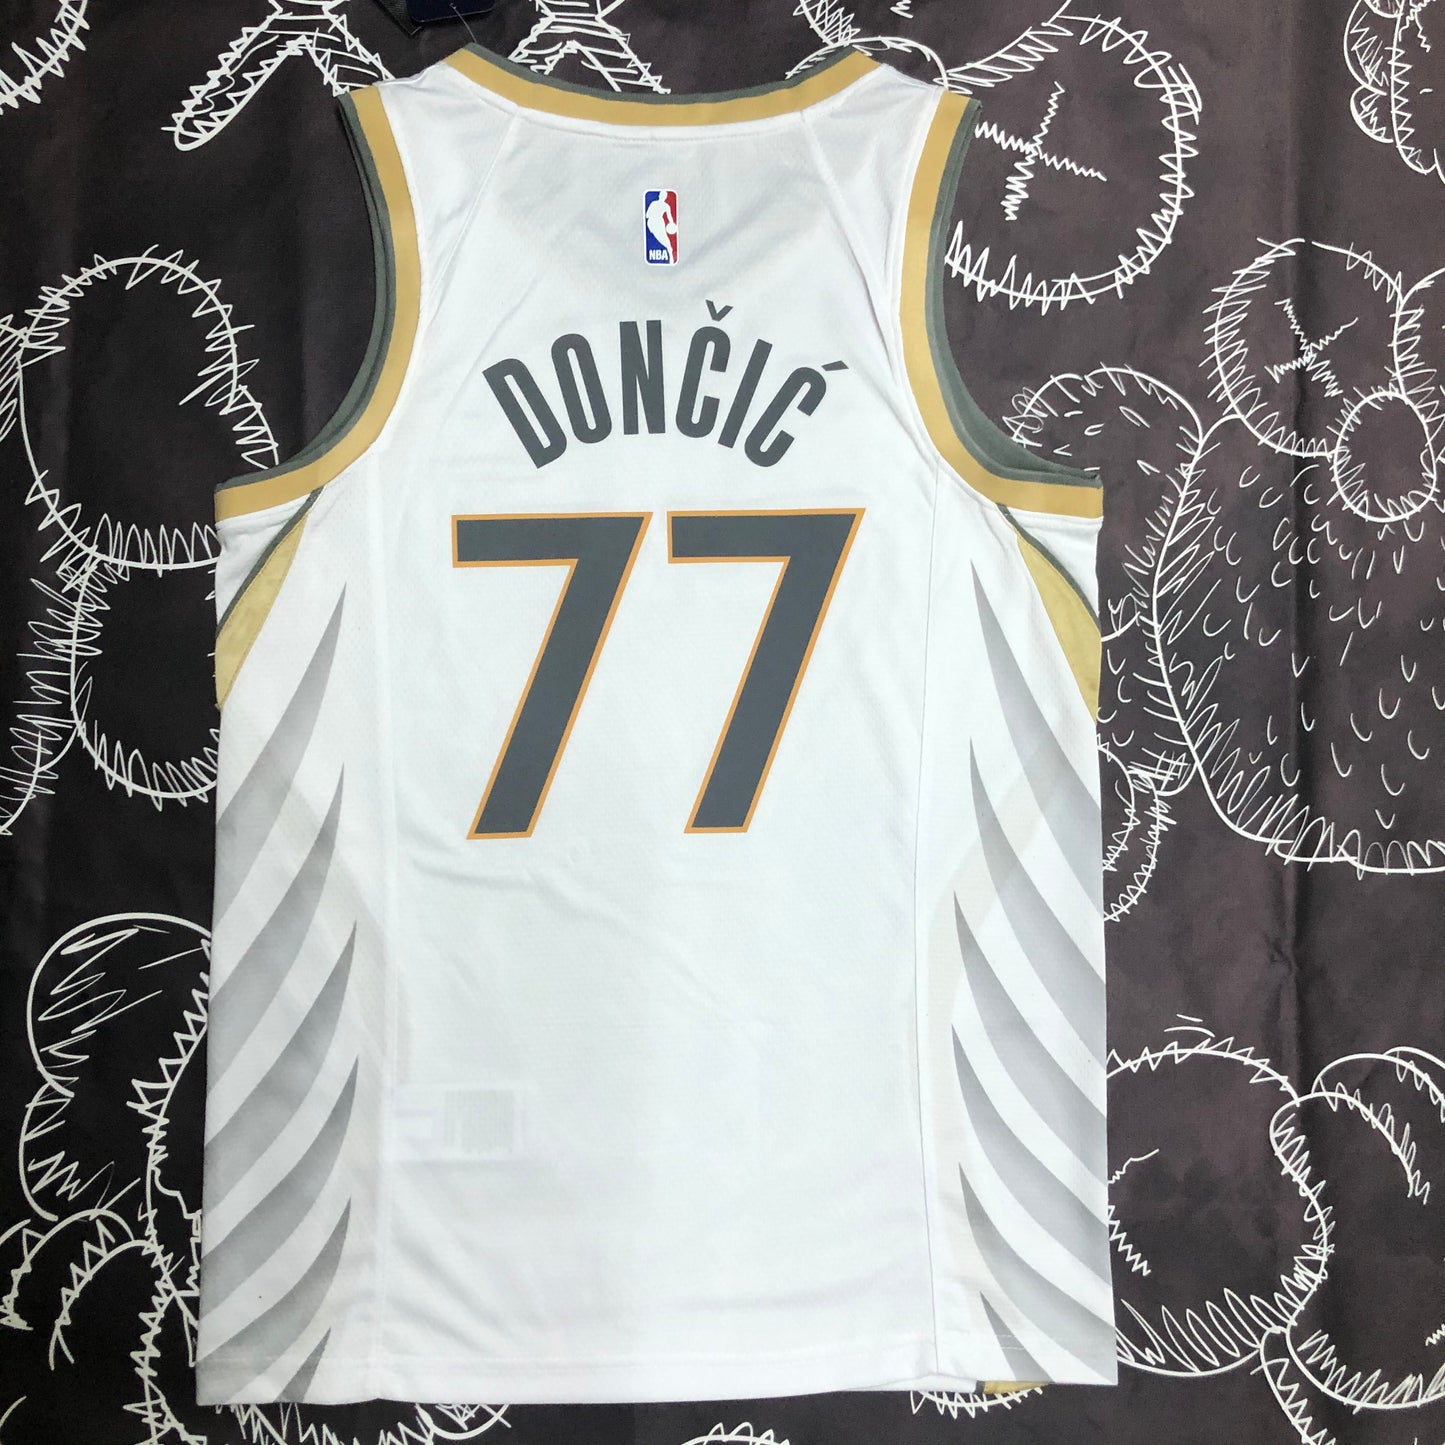 Dallas Mavericks Luka Dončić 2019/20 Nike City Edition NBA Swingman Jersey - White Gold